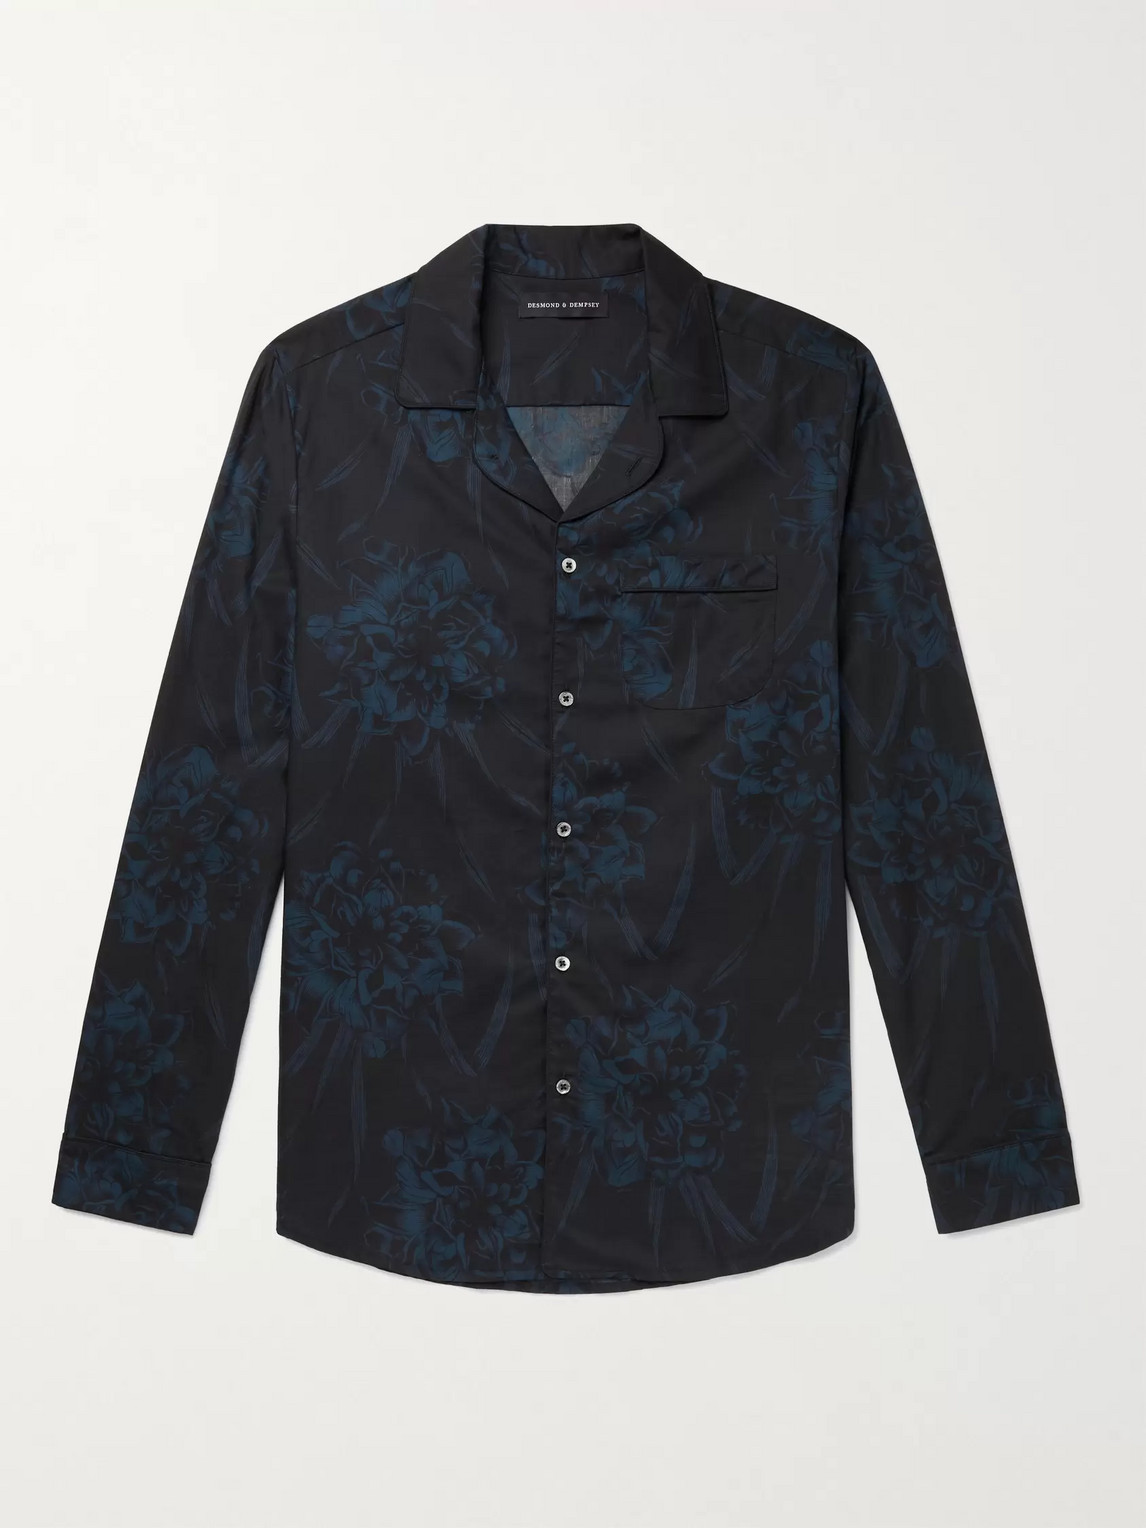 Desmond & Dempsey Camp-collar Piped Printed Cotton Pyjama Shirt In Black